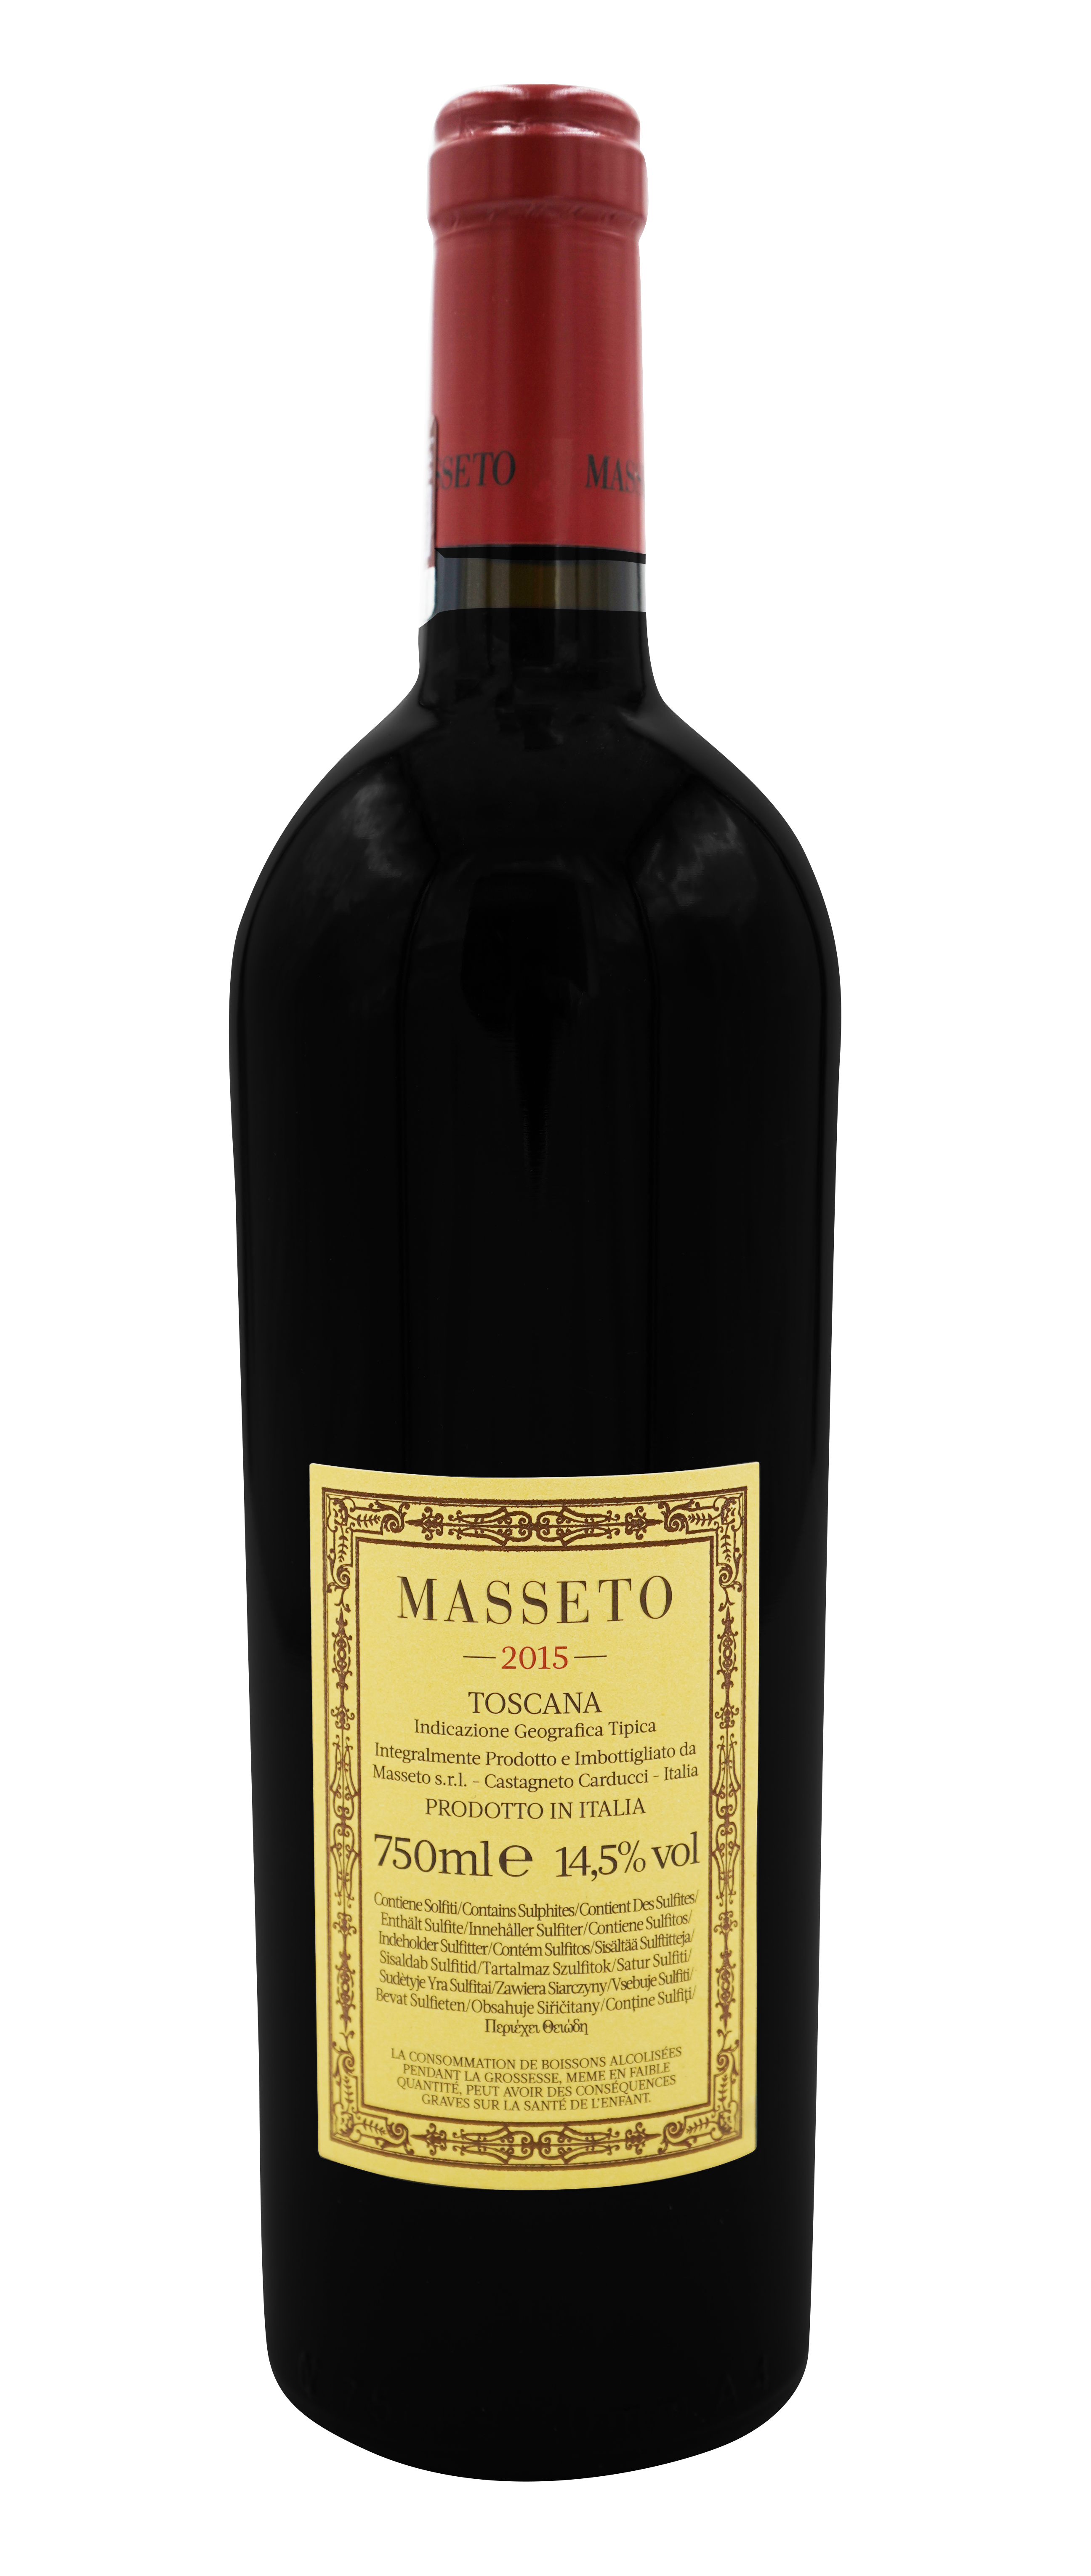 Masseto 2015 - back label